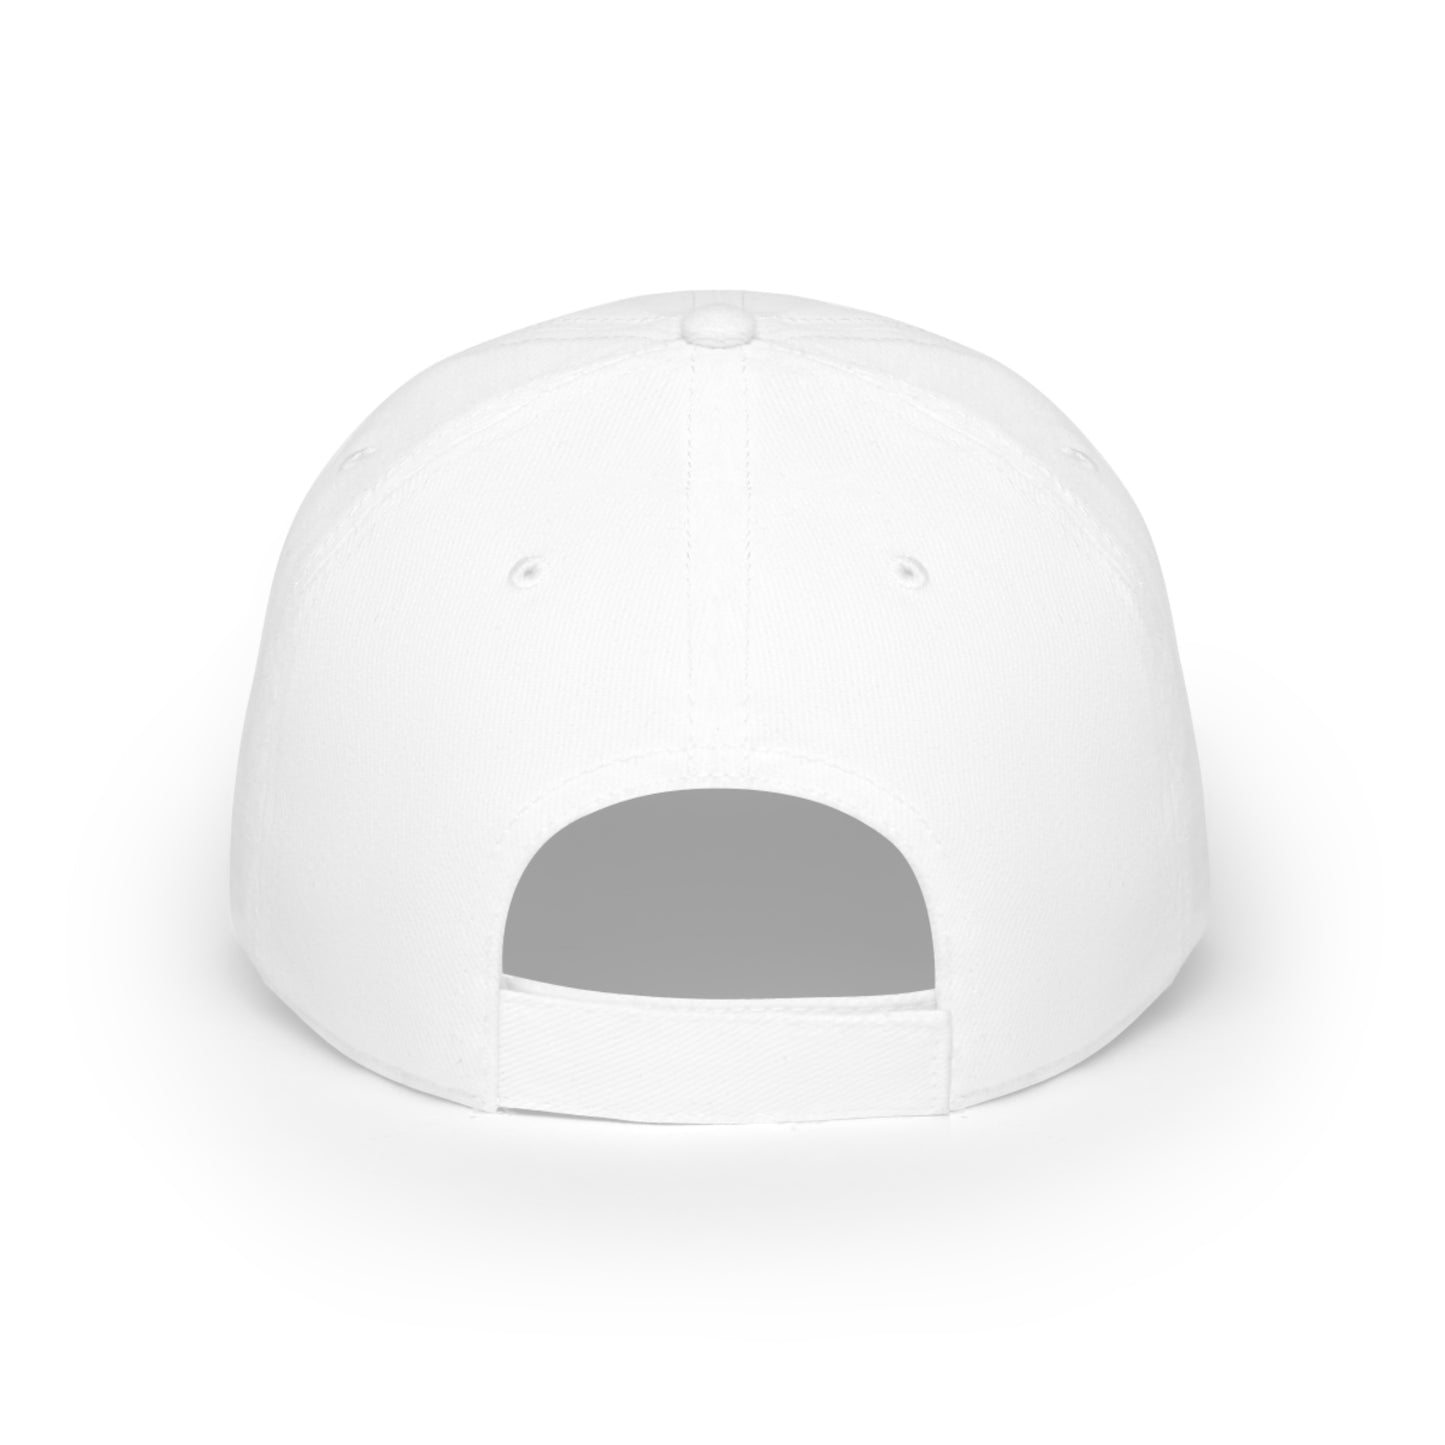 ShEmpower Fit Low Profile Baseball Cap